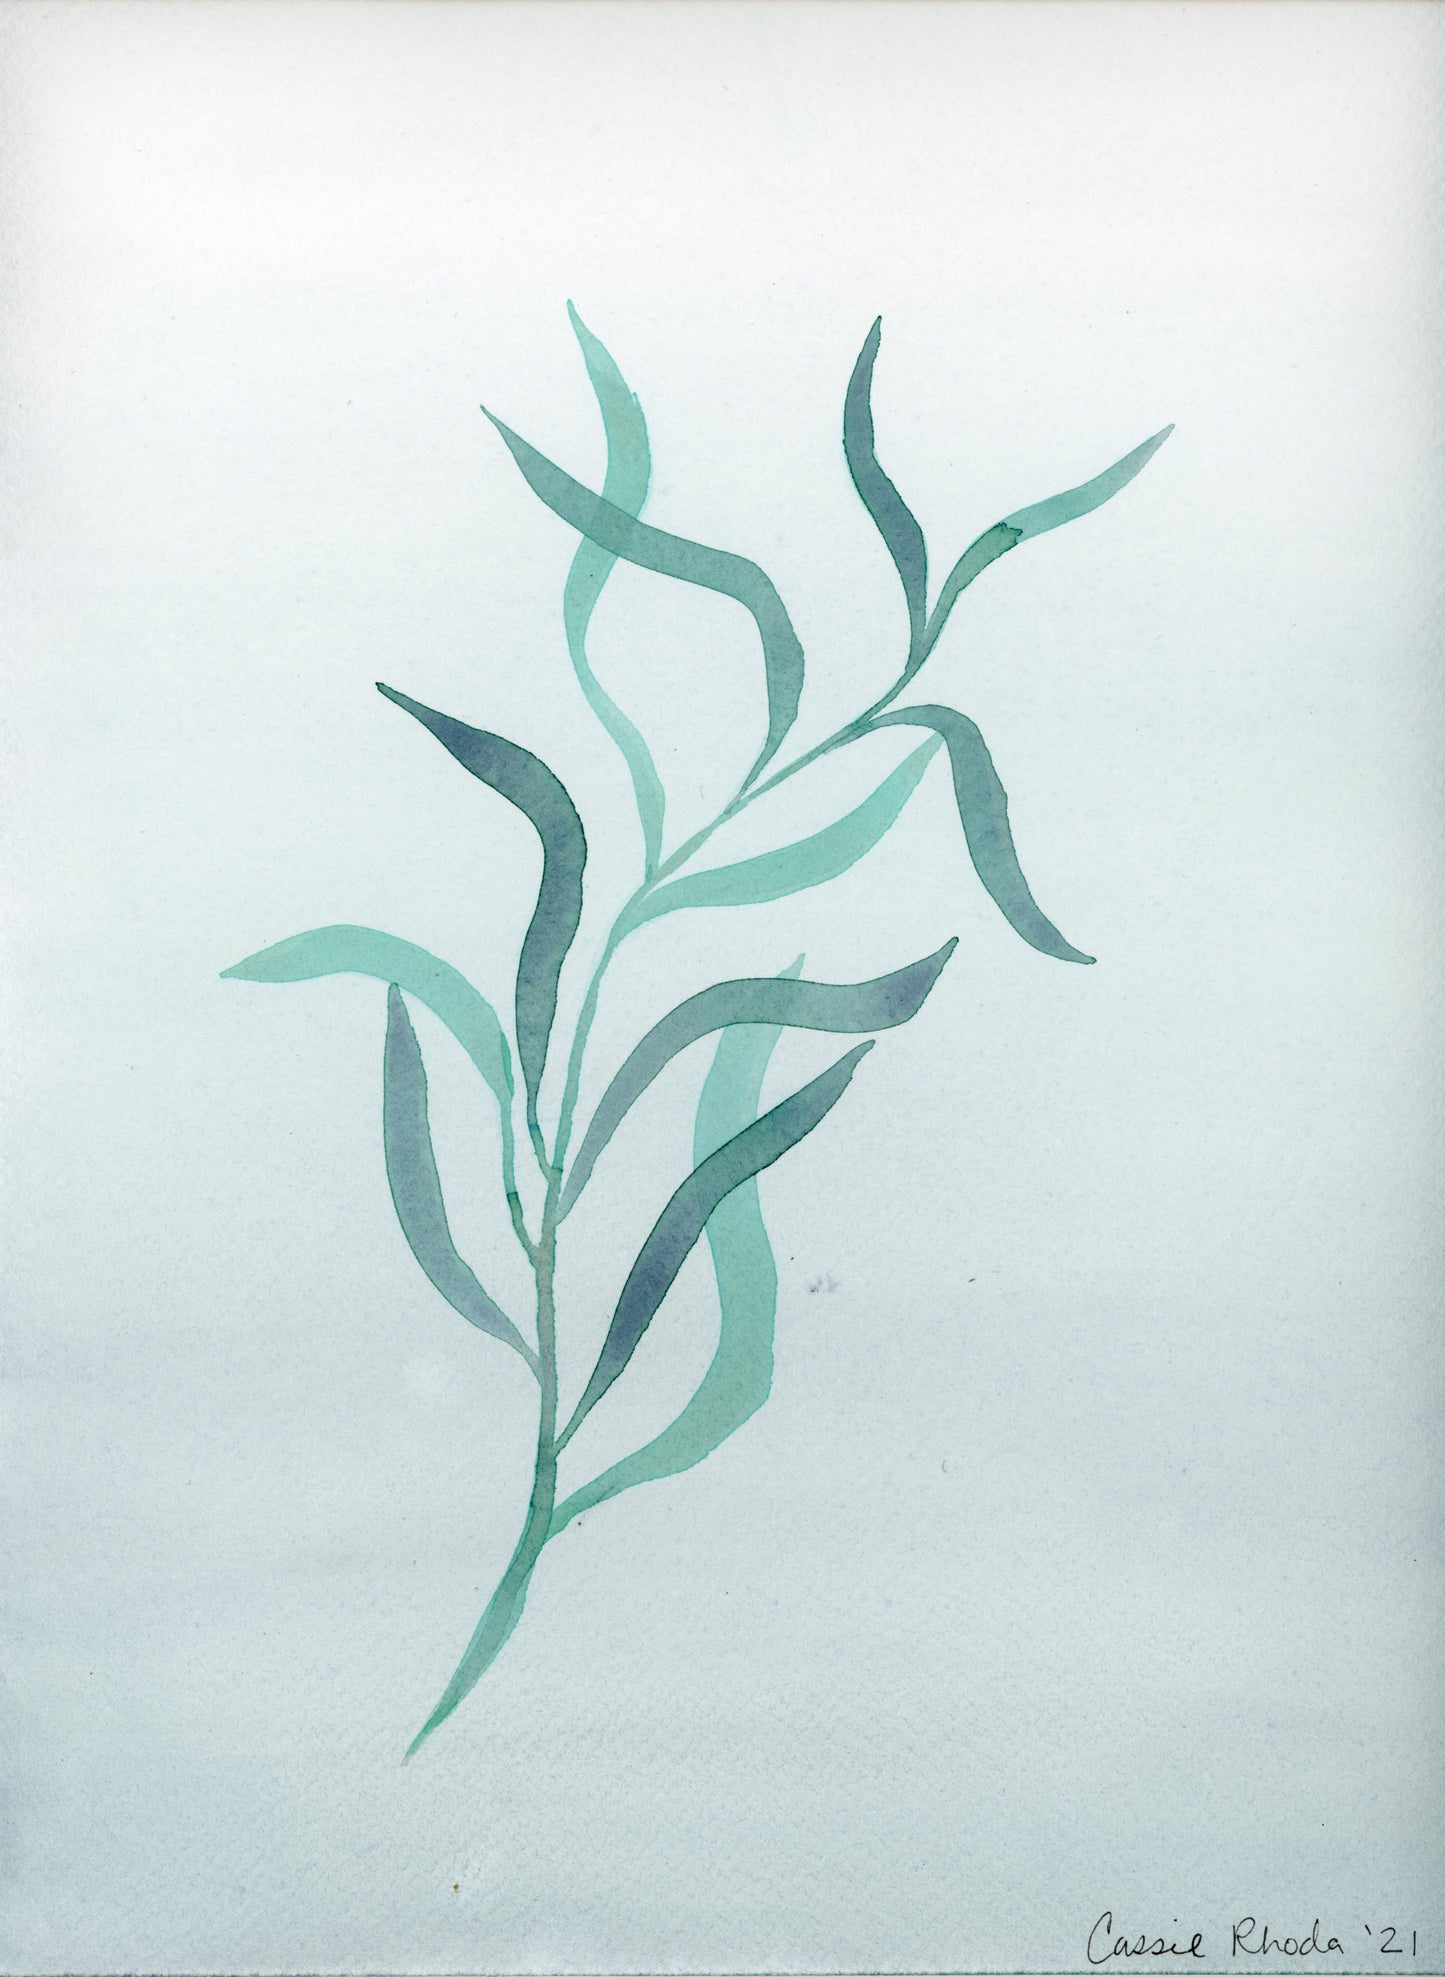 "Seaweed" Original Watercolor Painting